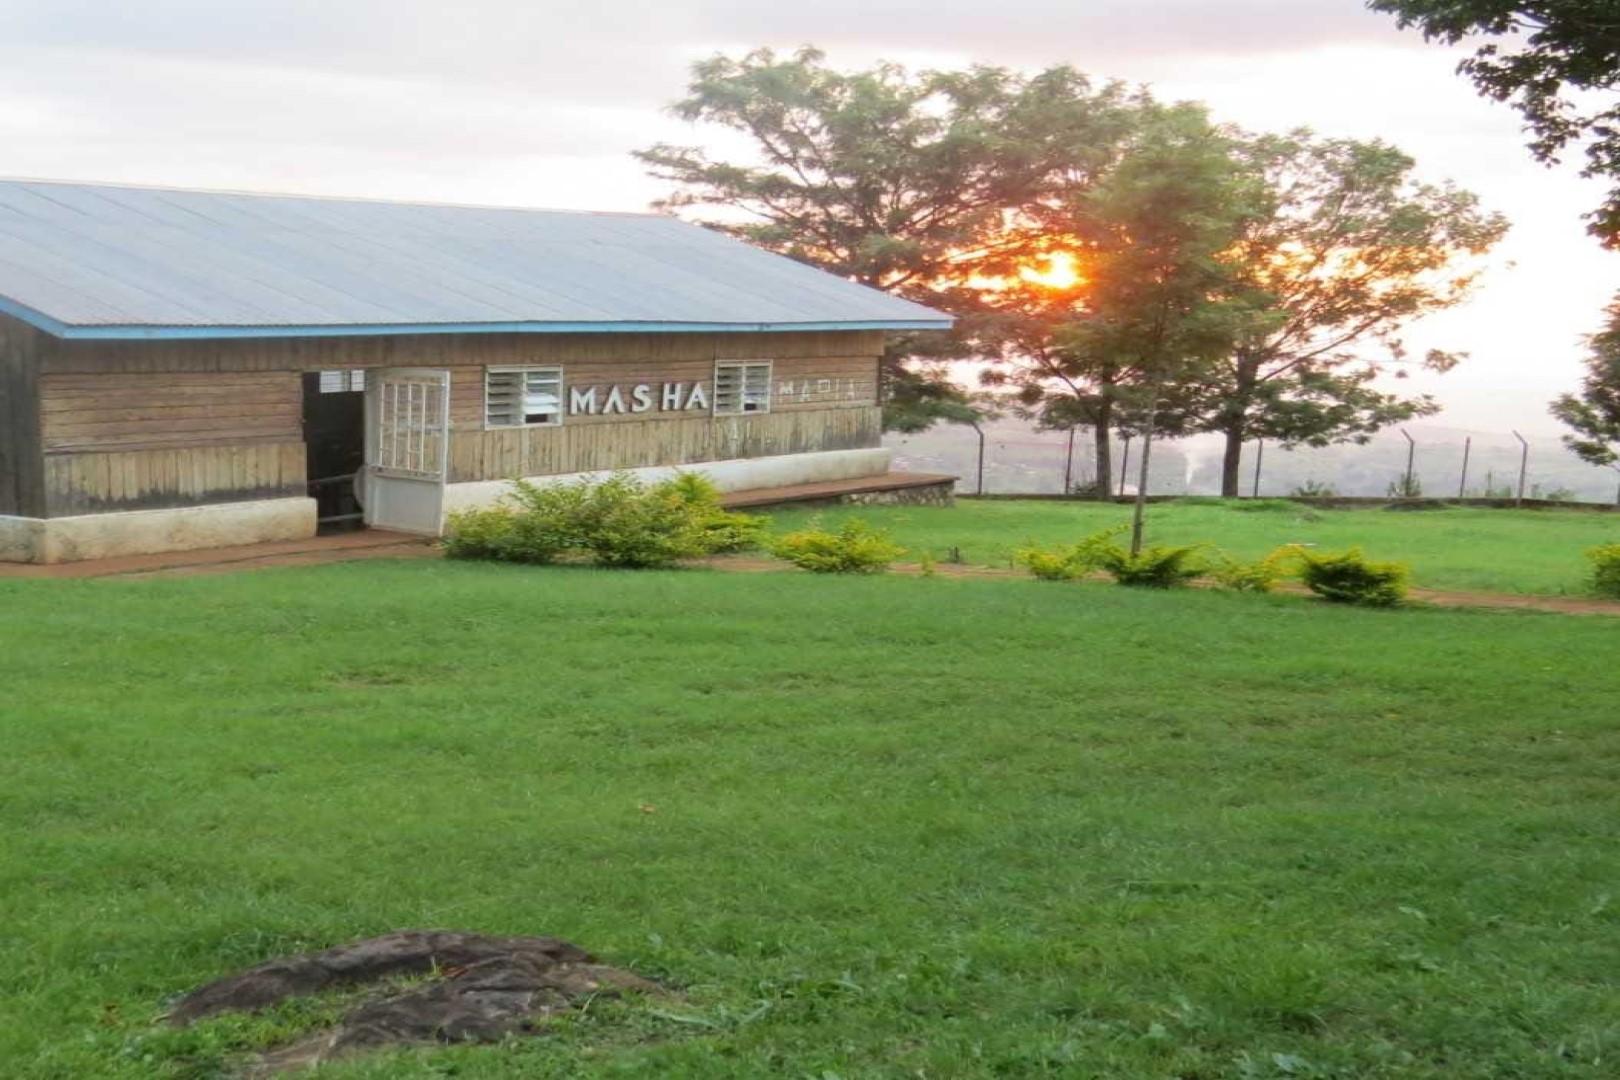 Masha hotel, Kapchorwa near Mount Elgon National Park